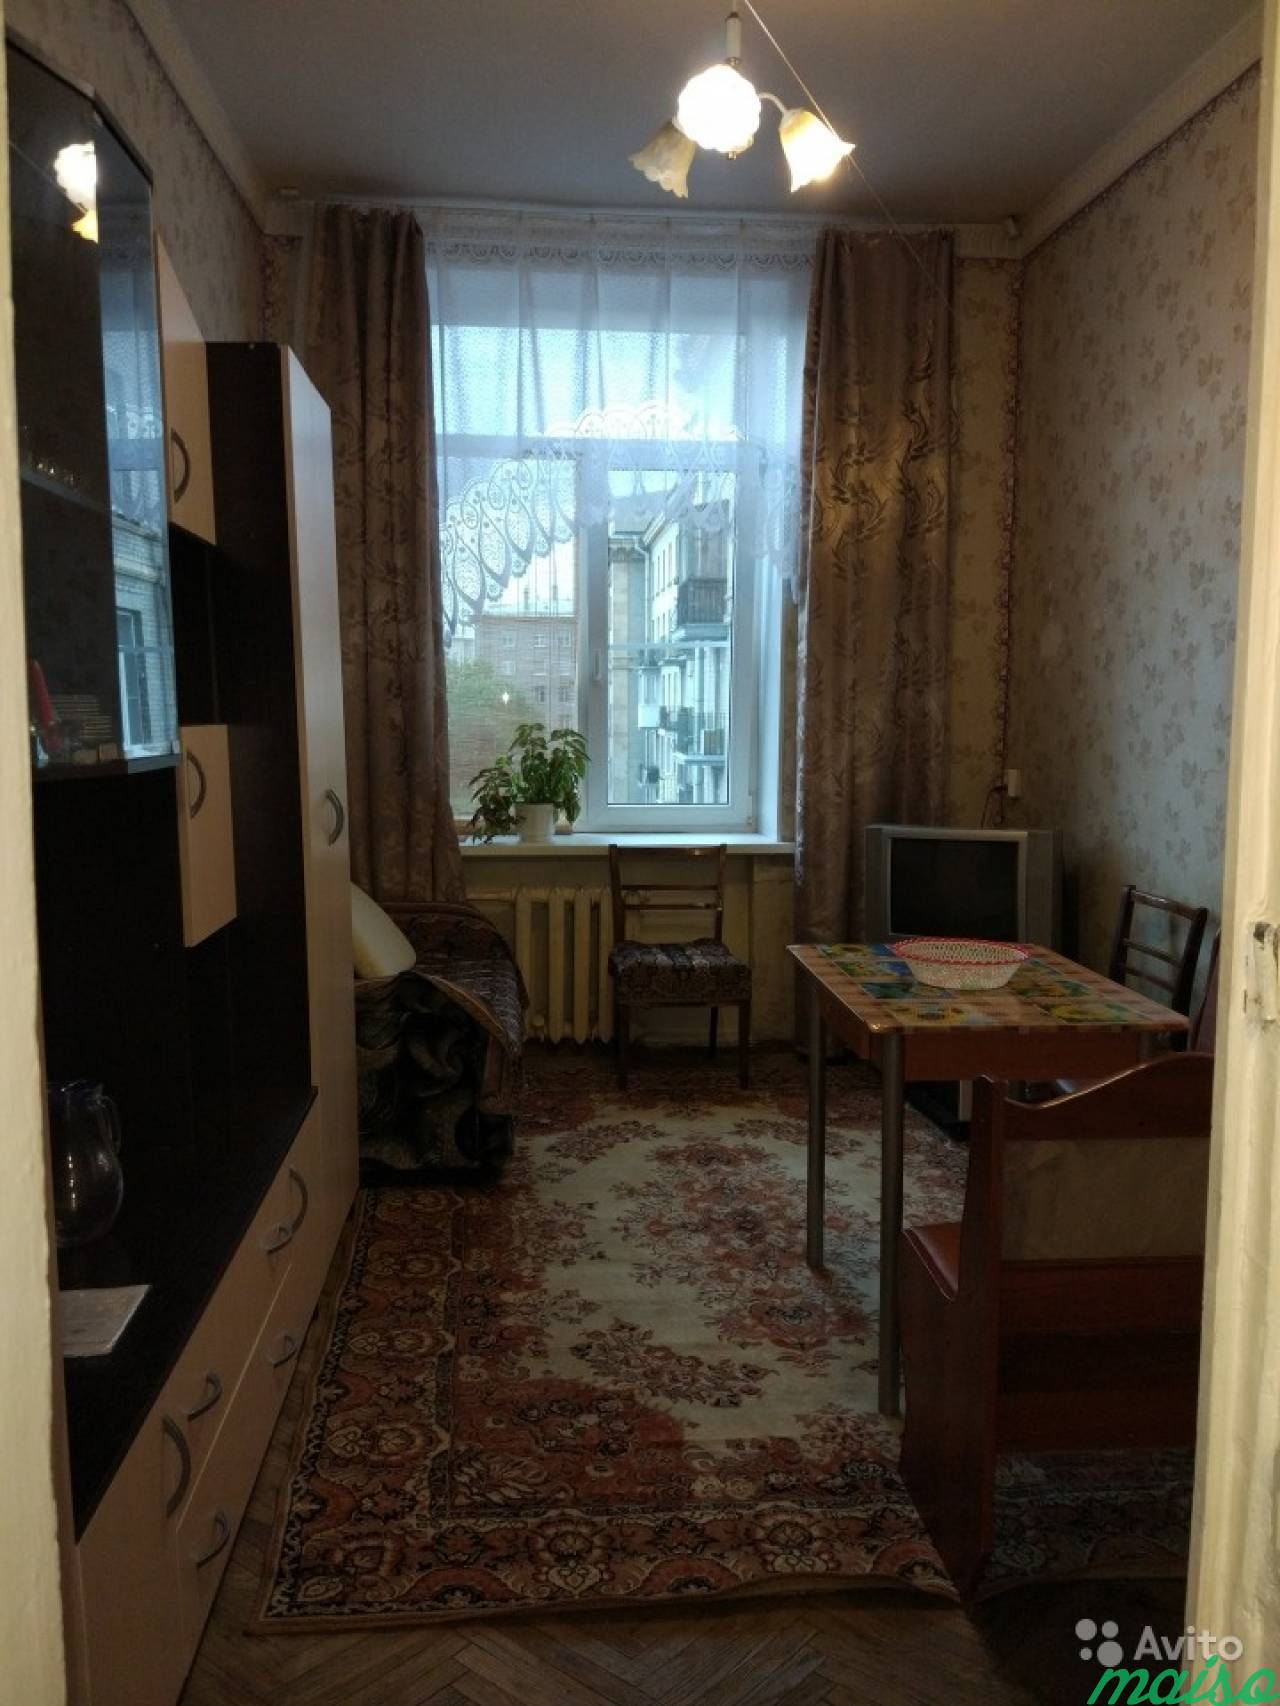 Комната 13 м² в 4-к, 5/7 эт. в Санкт-Петербурге. Фото 2